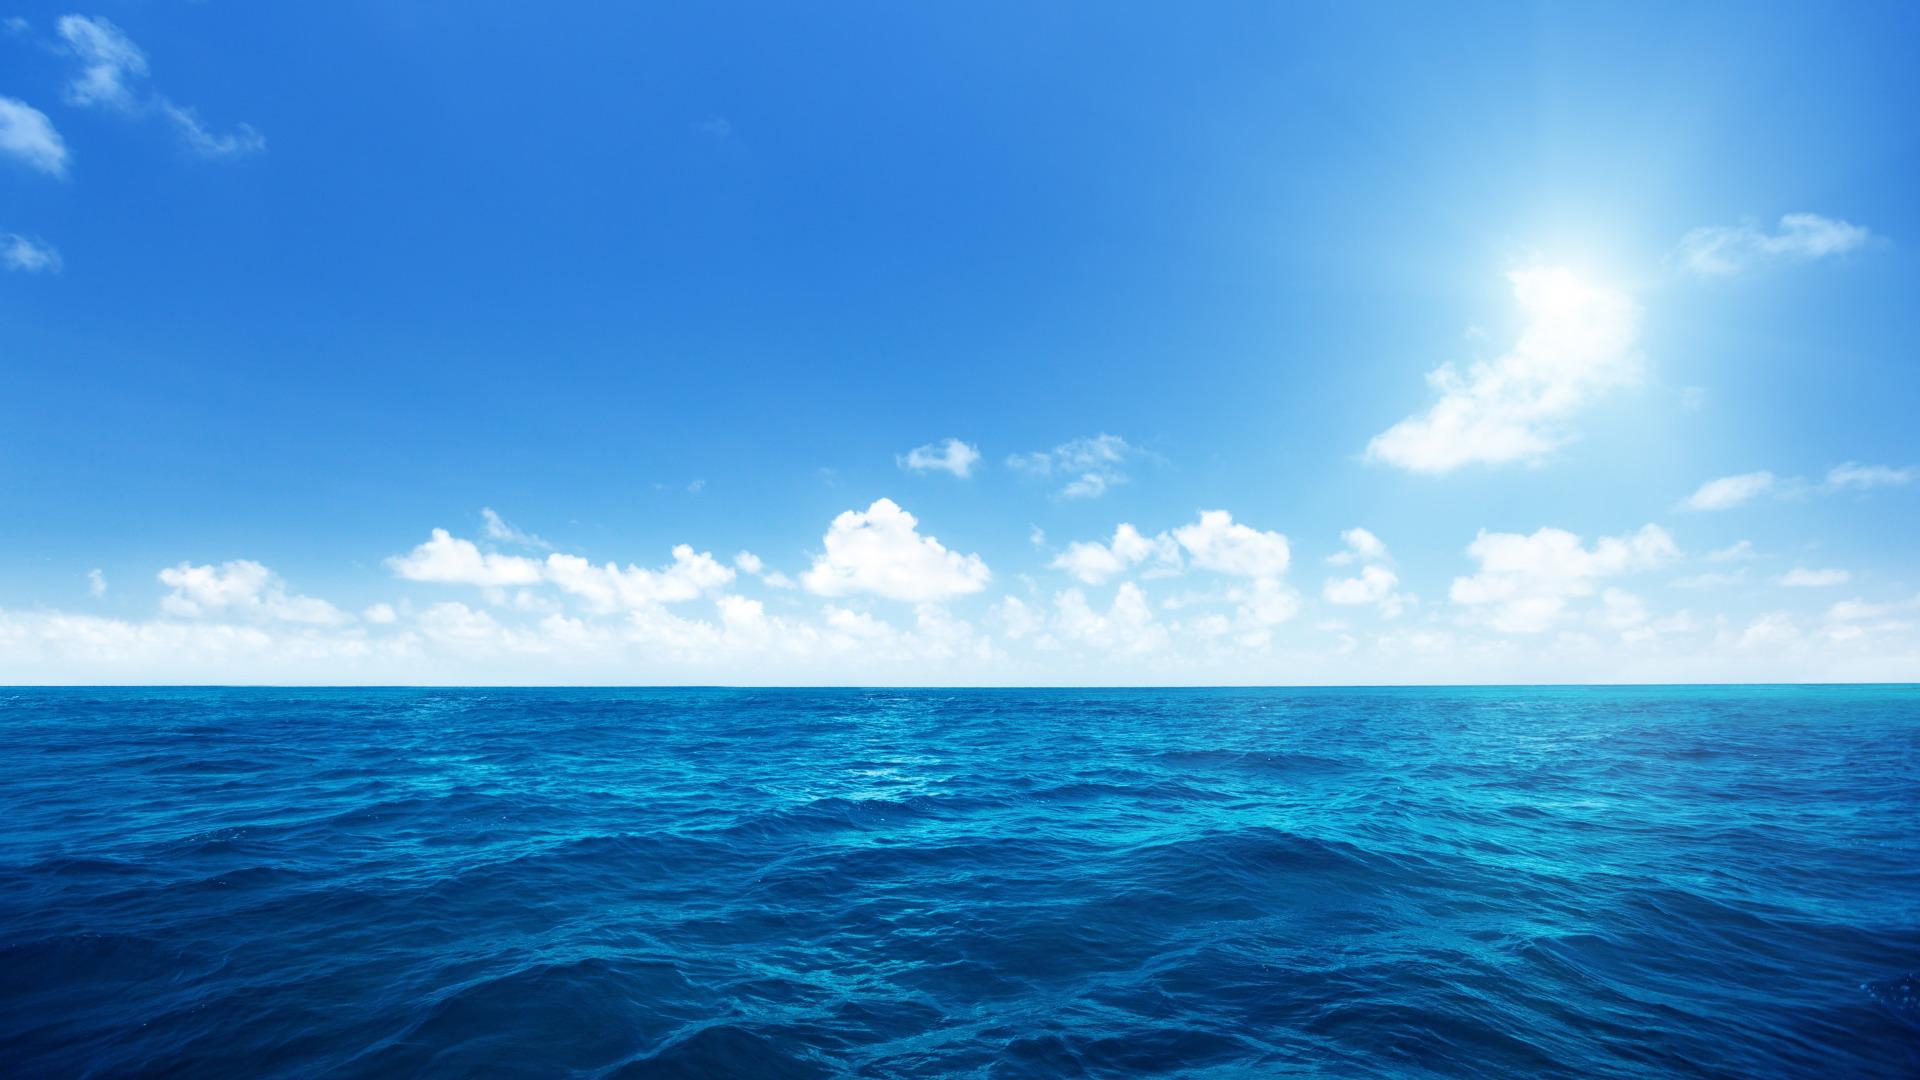 ocean scenery wallpaper,sky,horizon,sea,body of water,blue